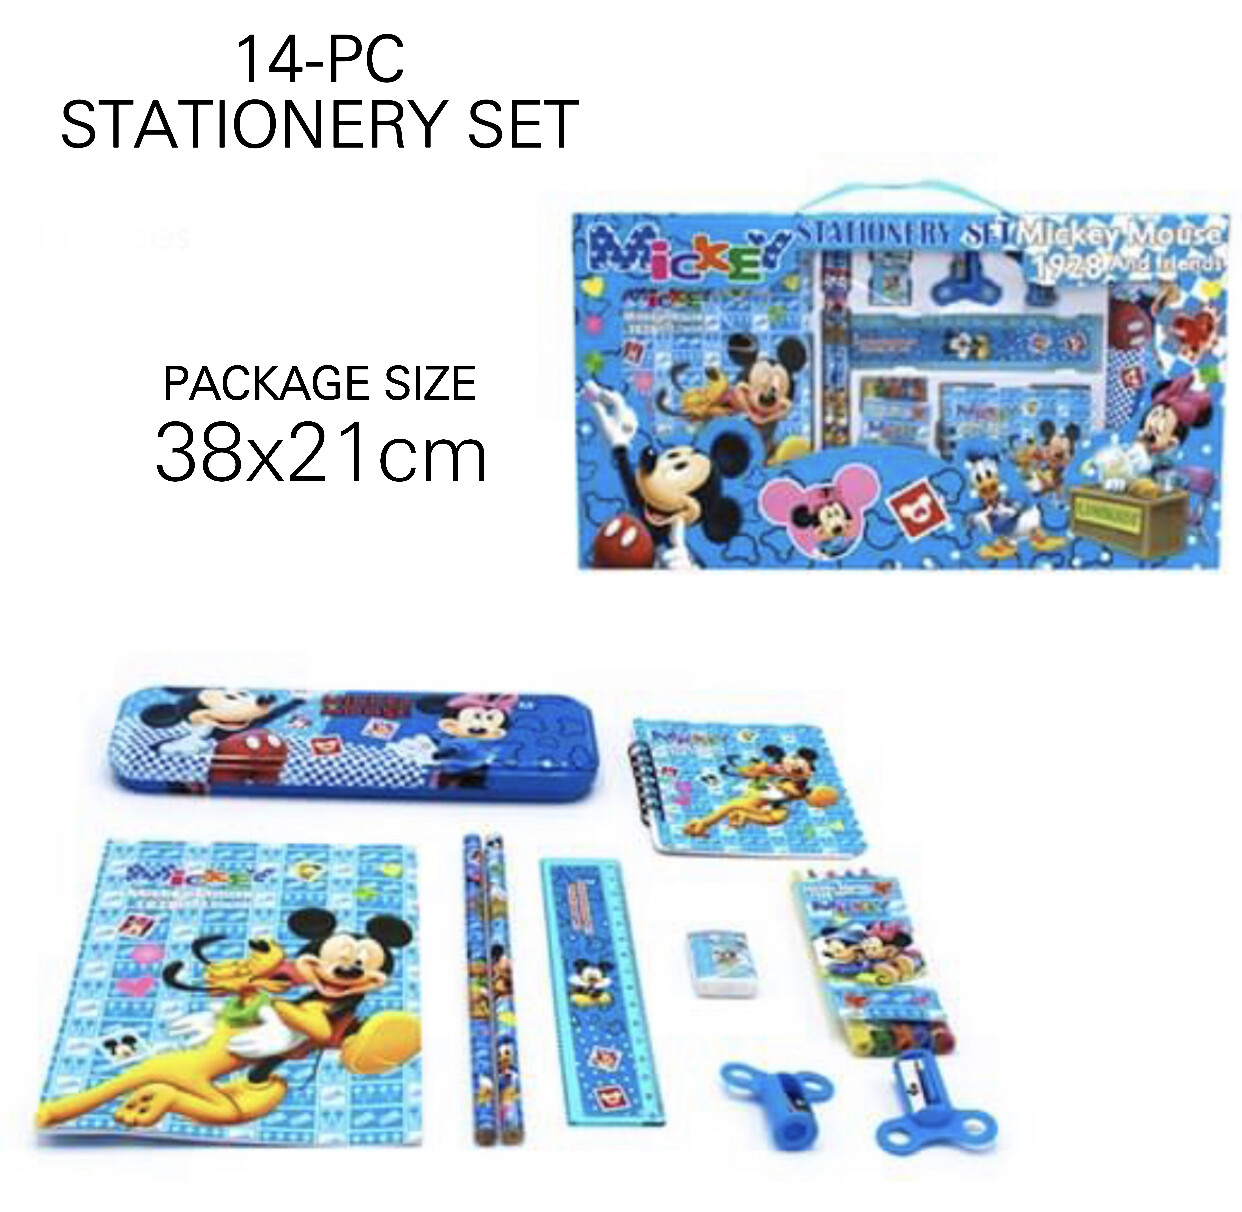 14-Pc Stationery Set